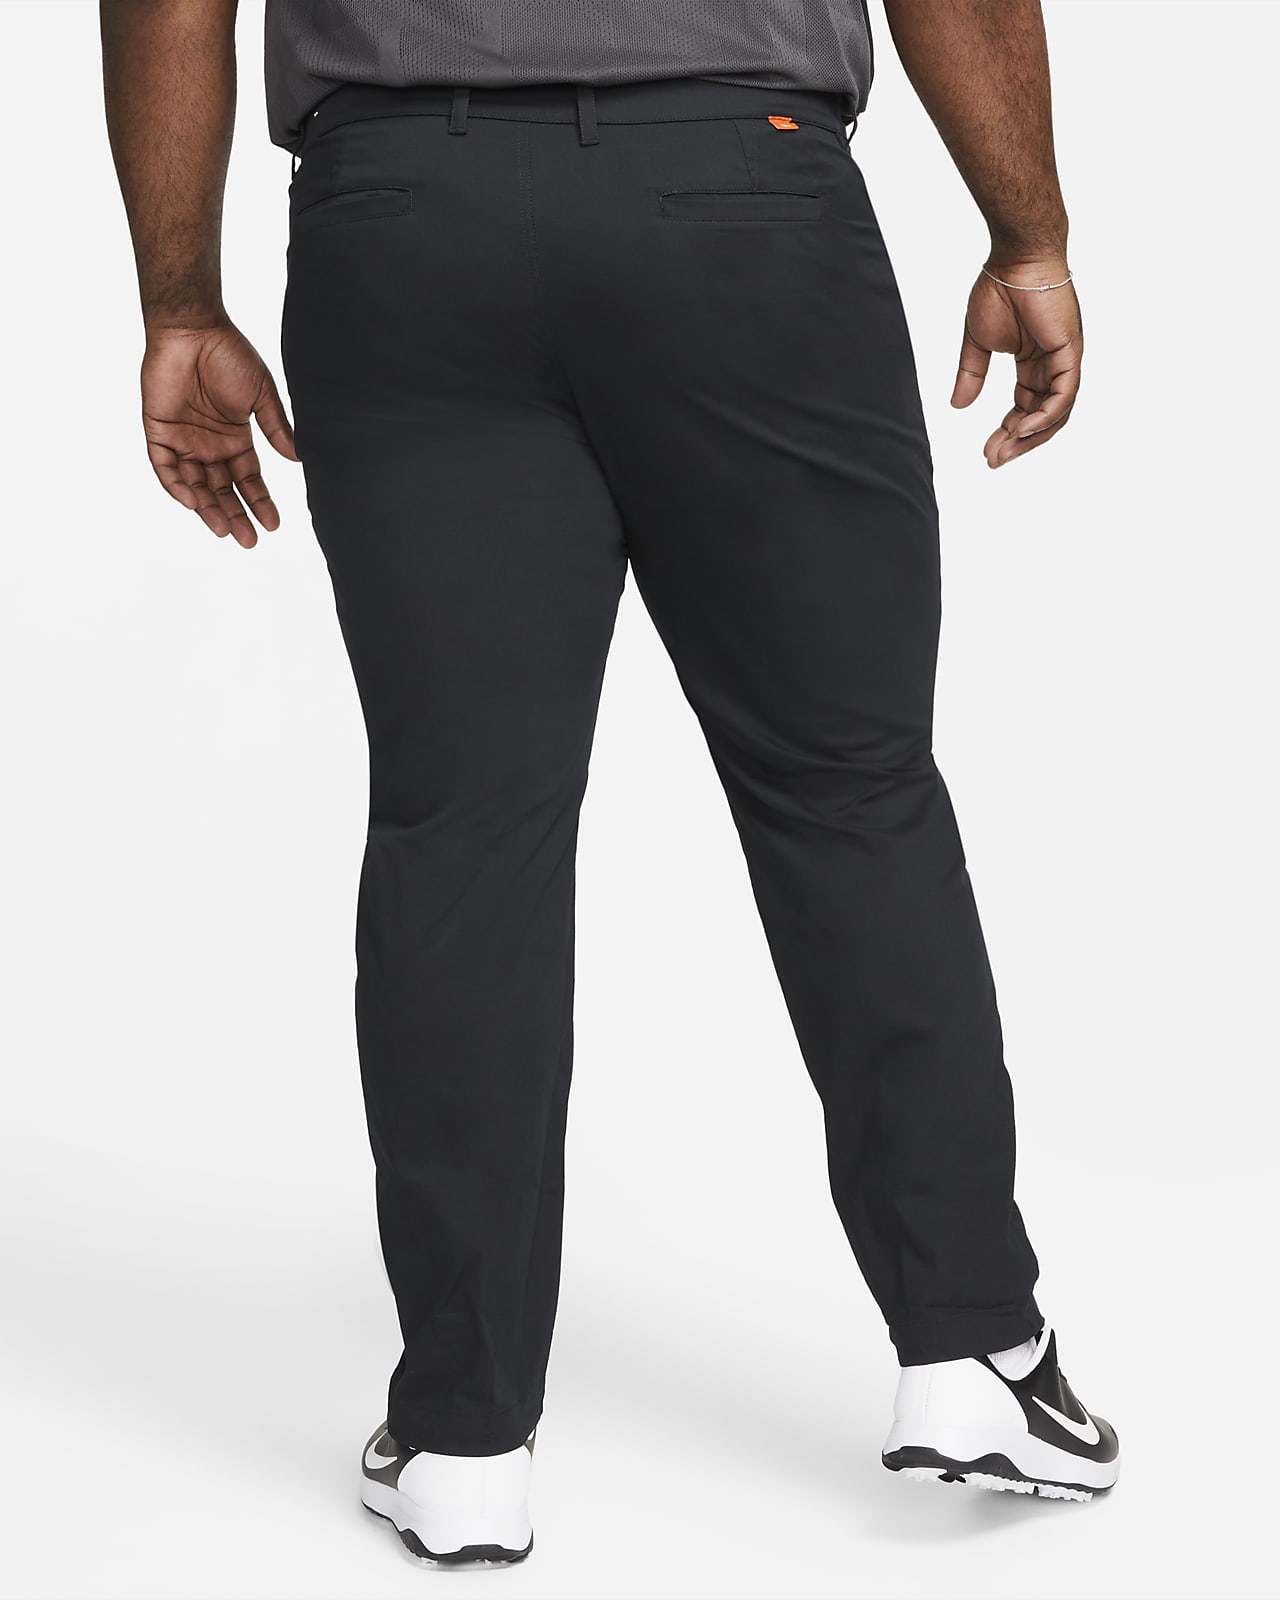 Nike Dri-FIT UV Men's Slim-Fit Golf Chino Pants.